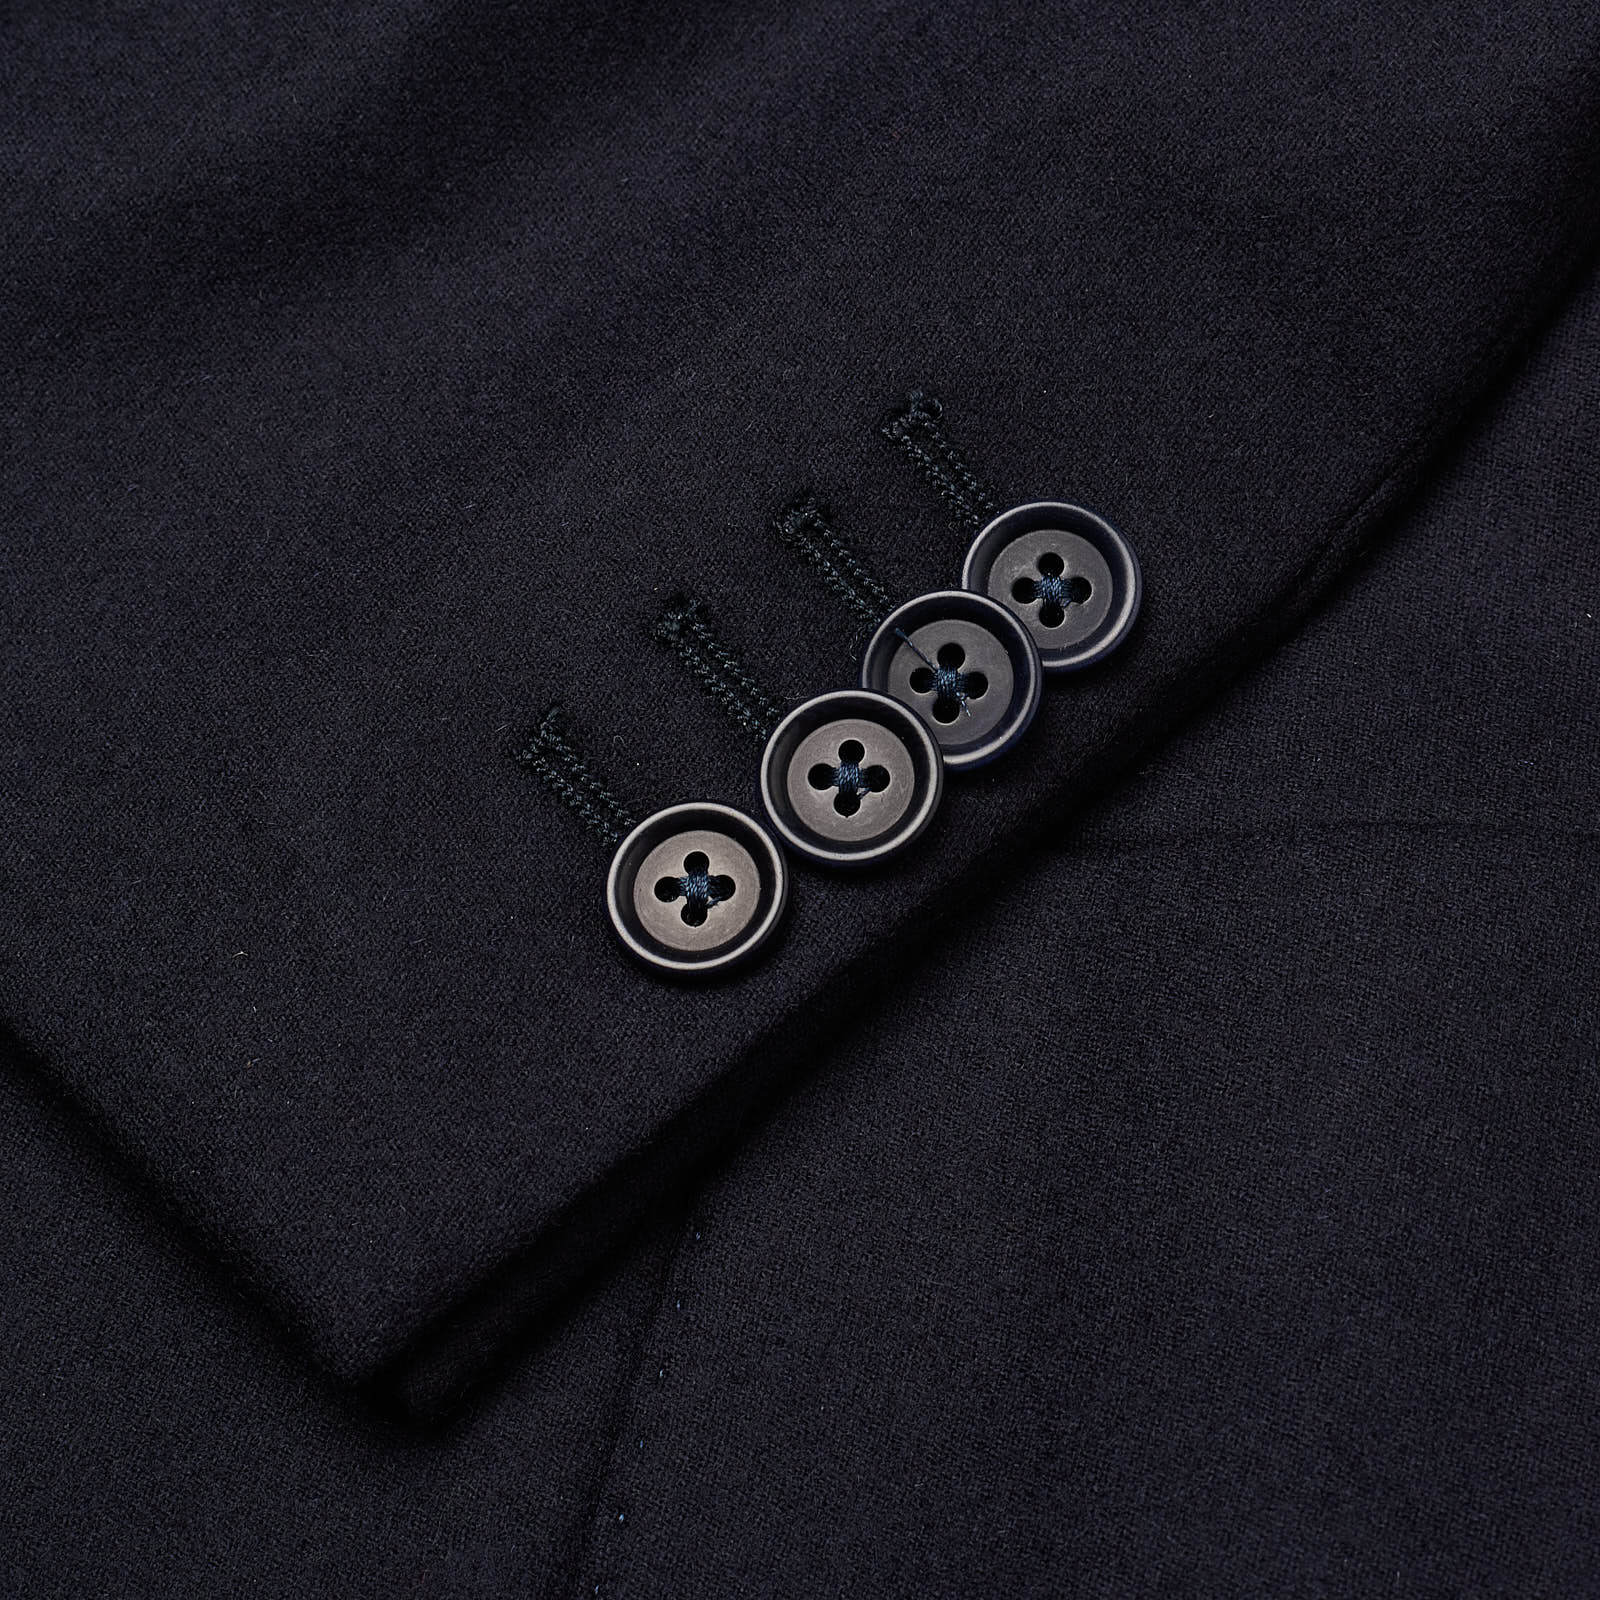 SARTORIA PARTENOPEA Navy Blue Wool-Cashmere DB Jacket Blazer EU 50 NEW US 40